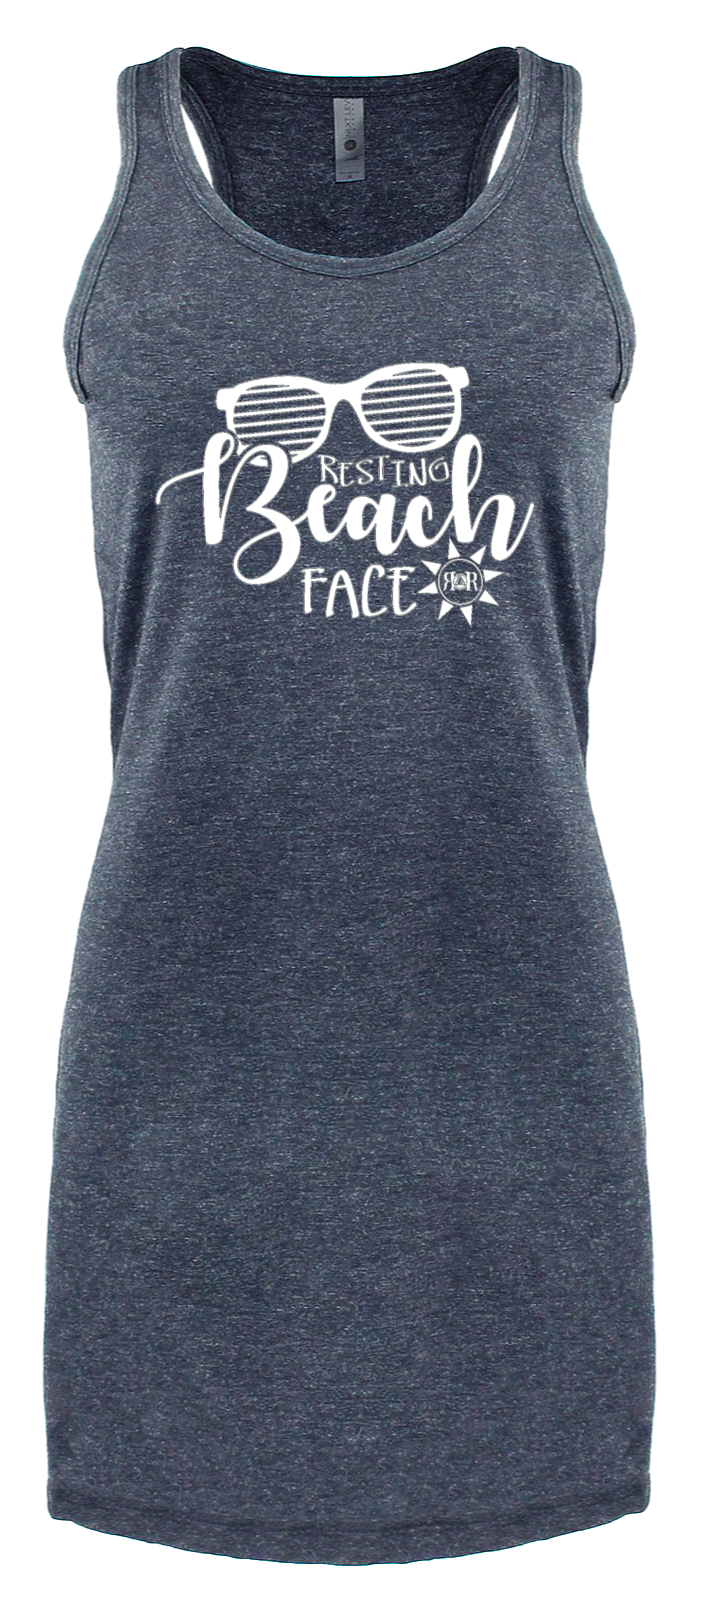 RBF Dress - Resting Beach Face